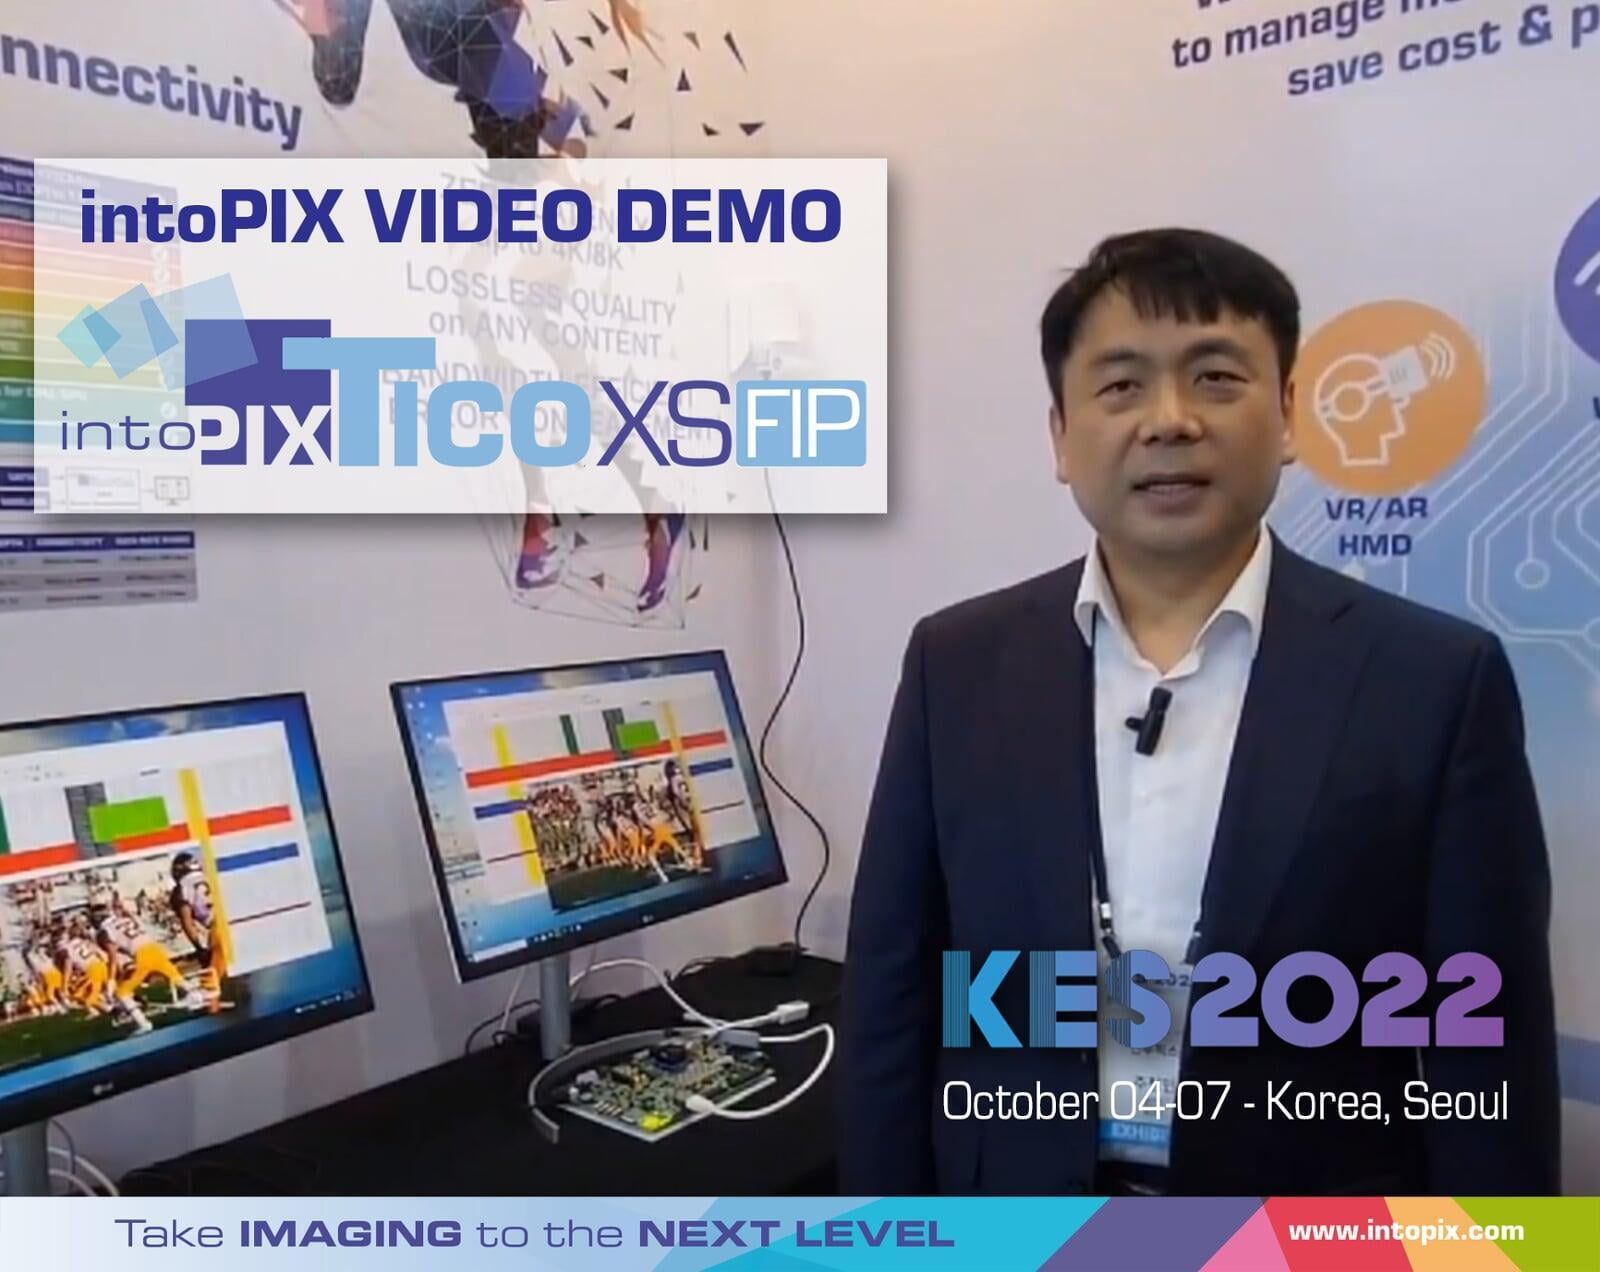 KES2022 한국어 비디오 데모 : 무선 전송을 위한 새로운 intoPIX TicoXS FIP 발표